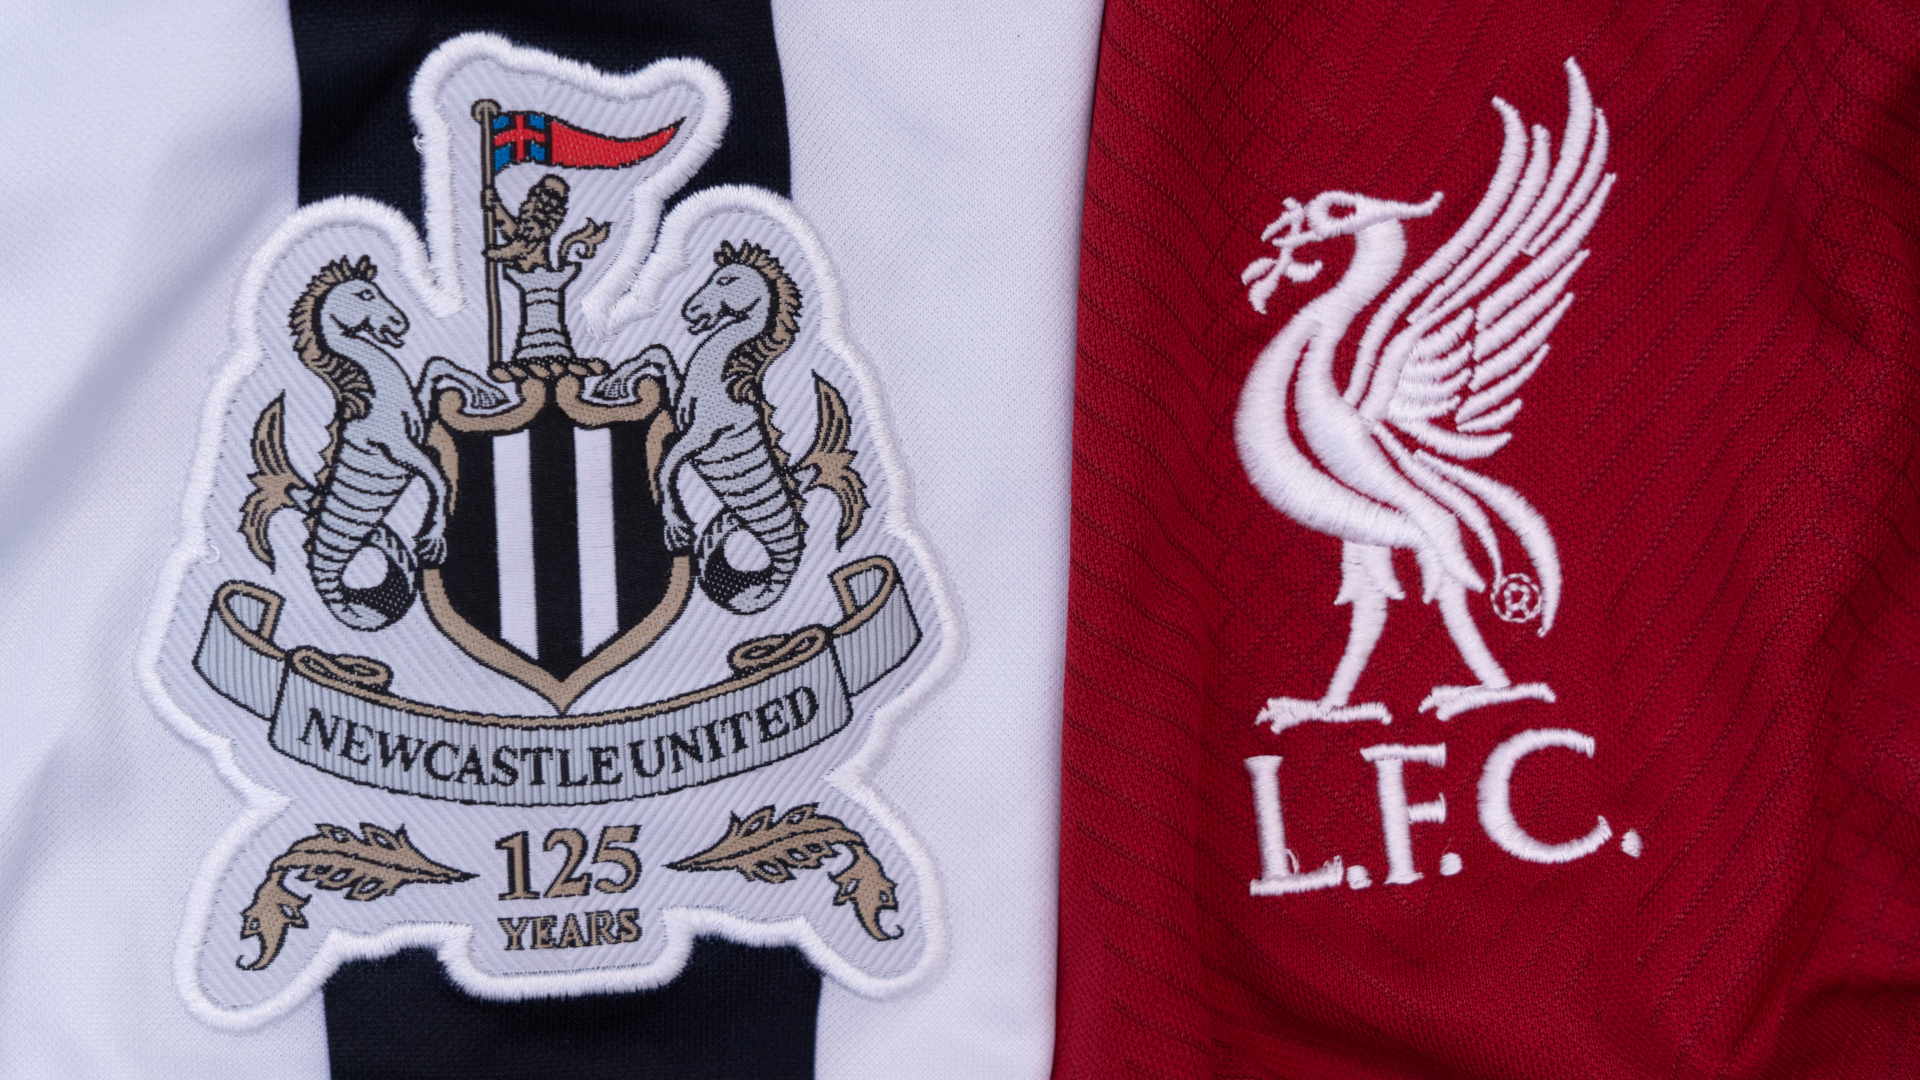 Newcastle United vs Liverpool club badges on football shirts